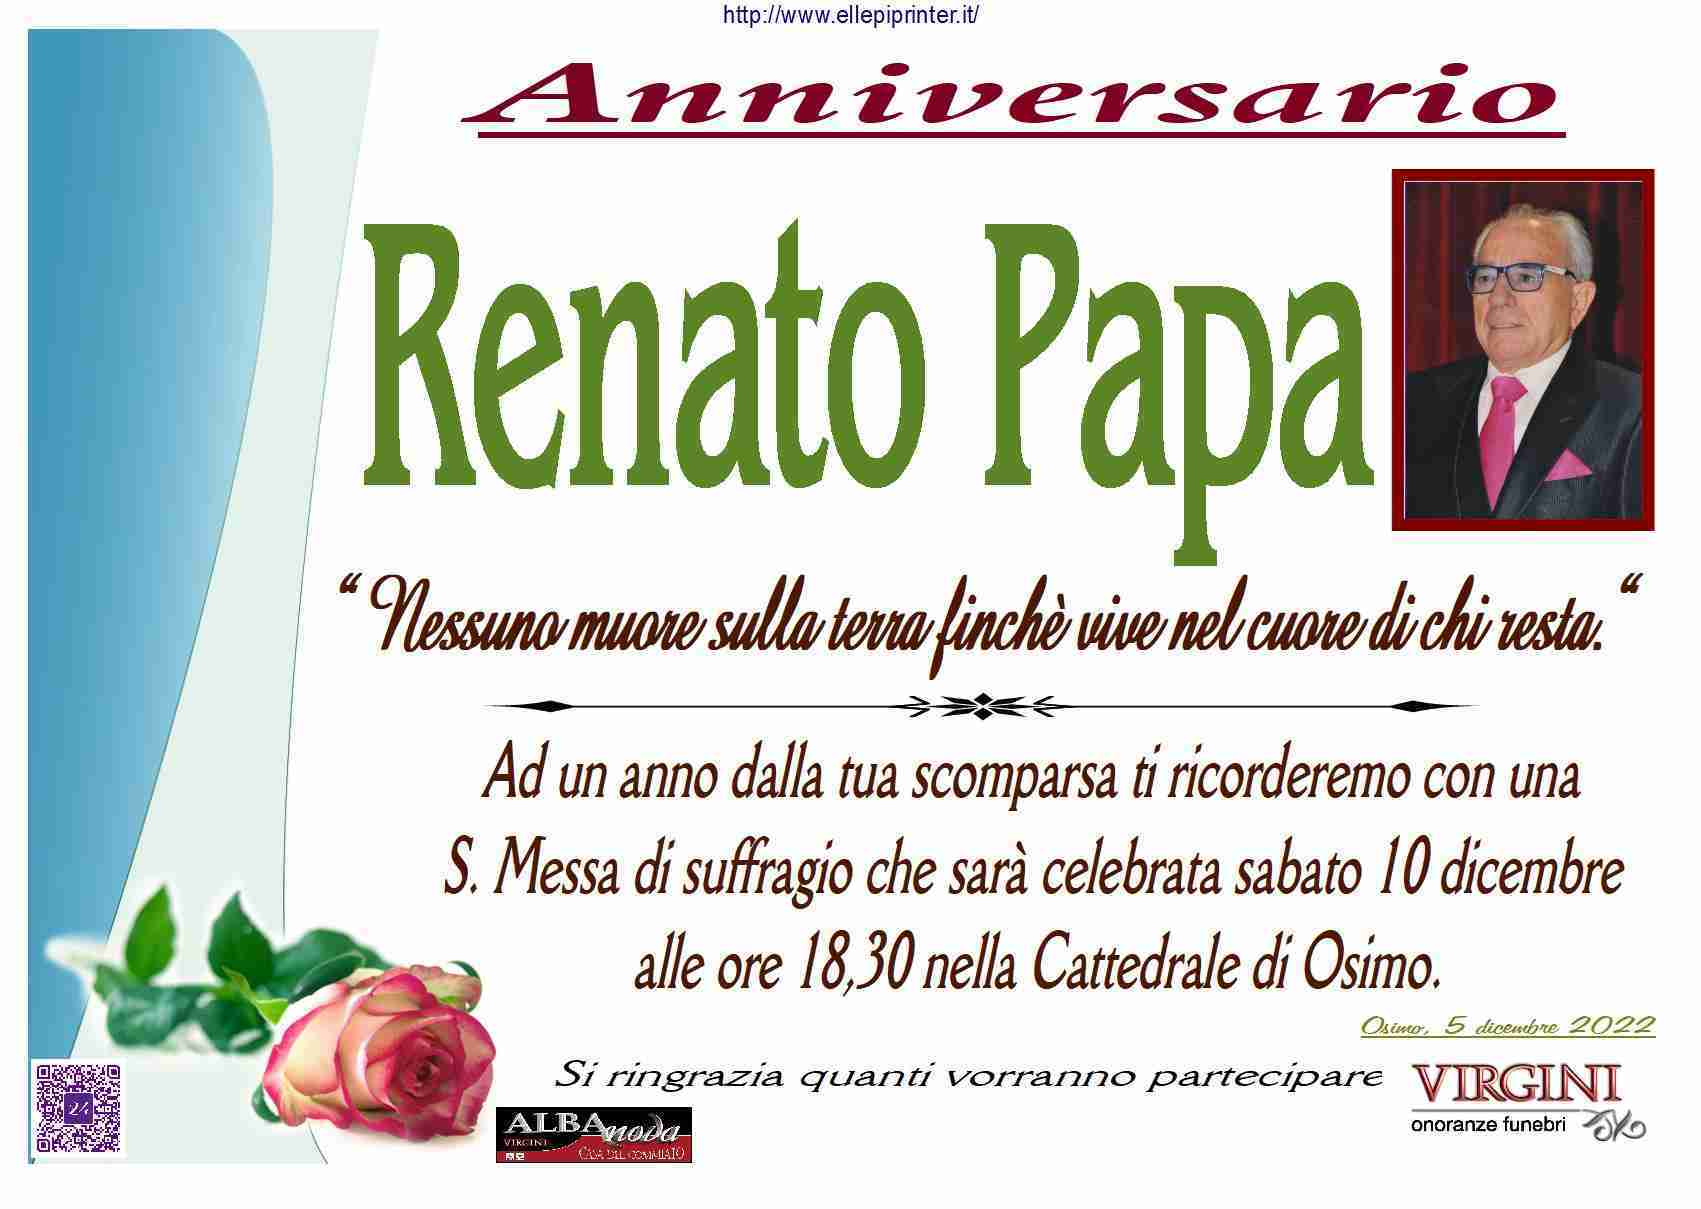 Renato Papa